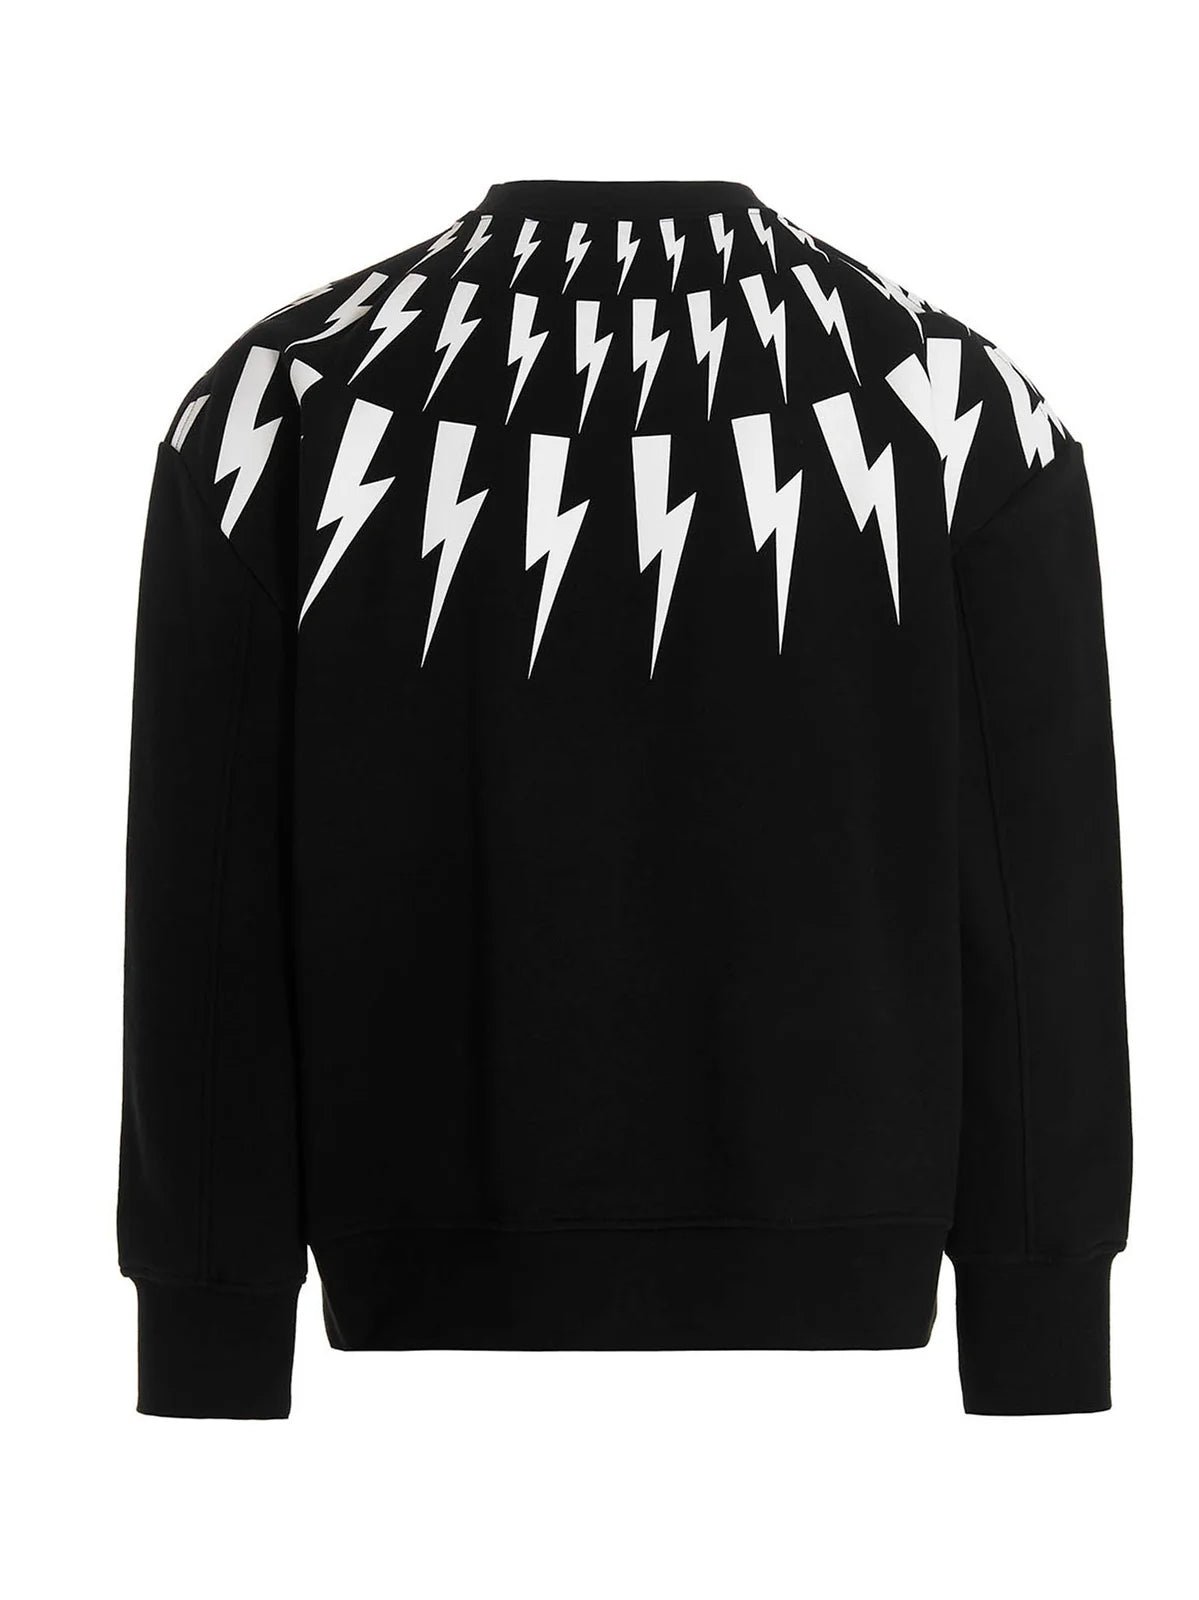 Neil Barrett Fair-Isle Thunderbolt Sweatshirt - Black/White - Escape Menswear